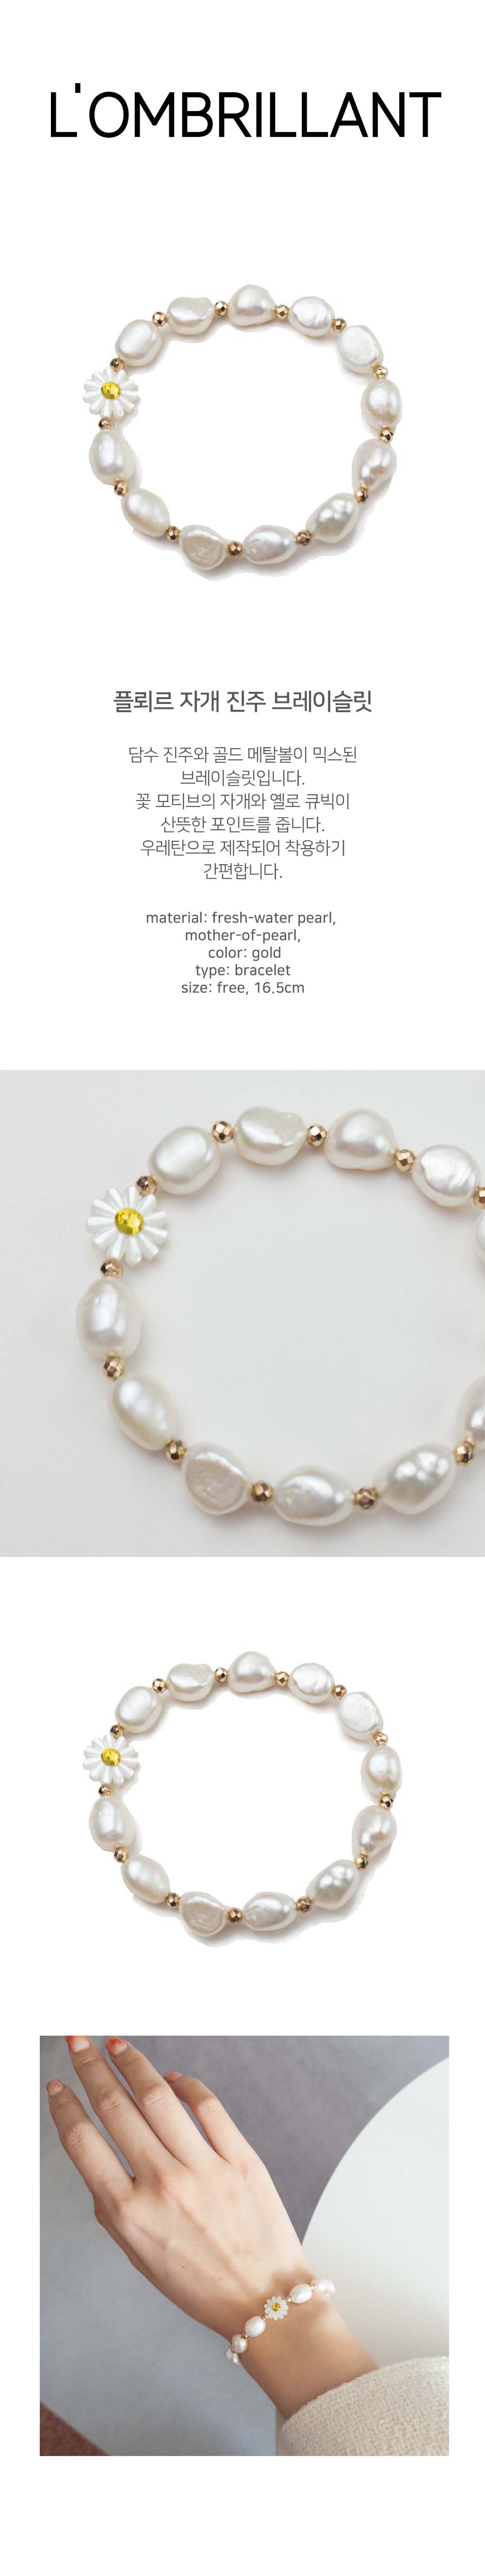 Fleur mother pearl bracelets